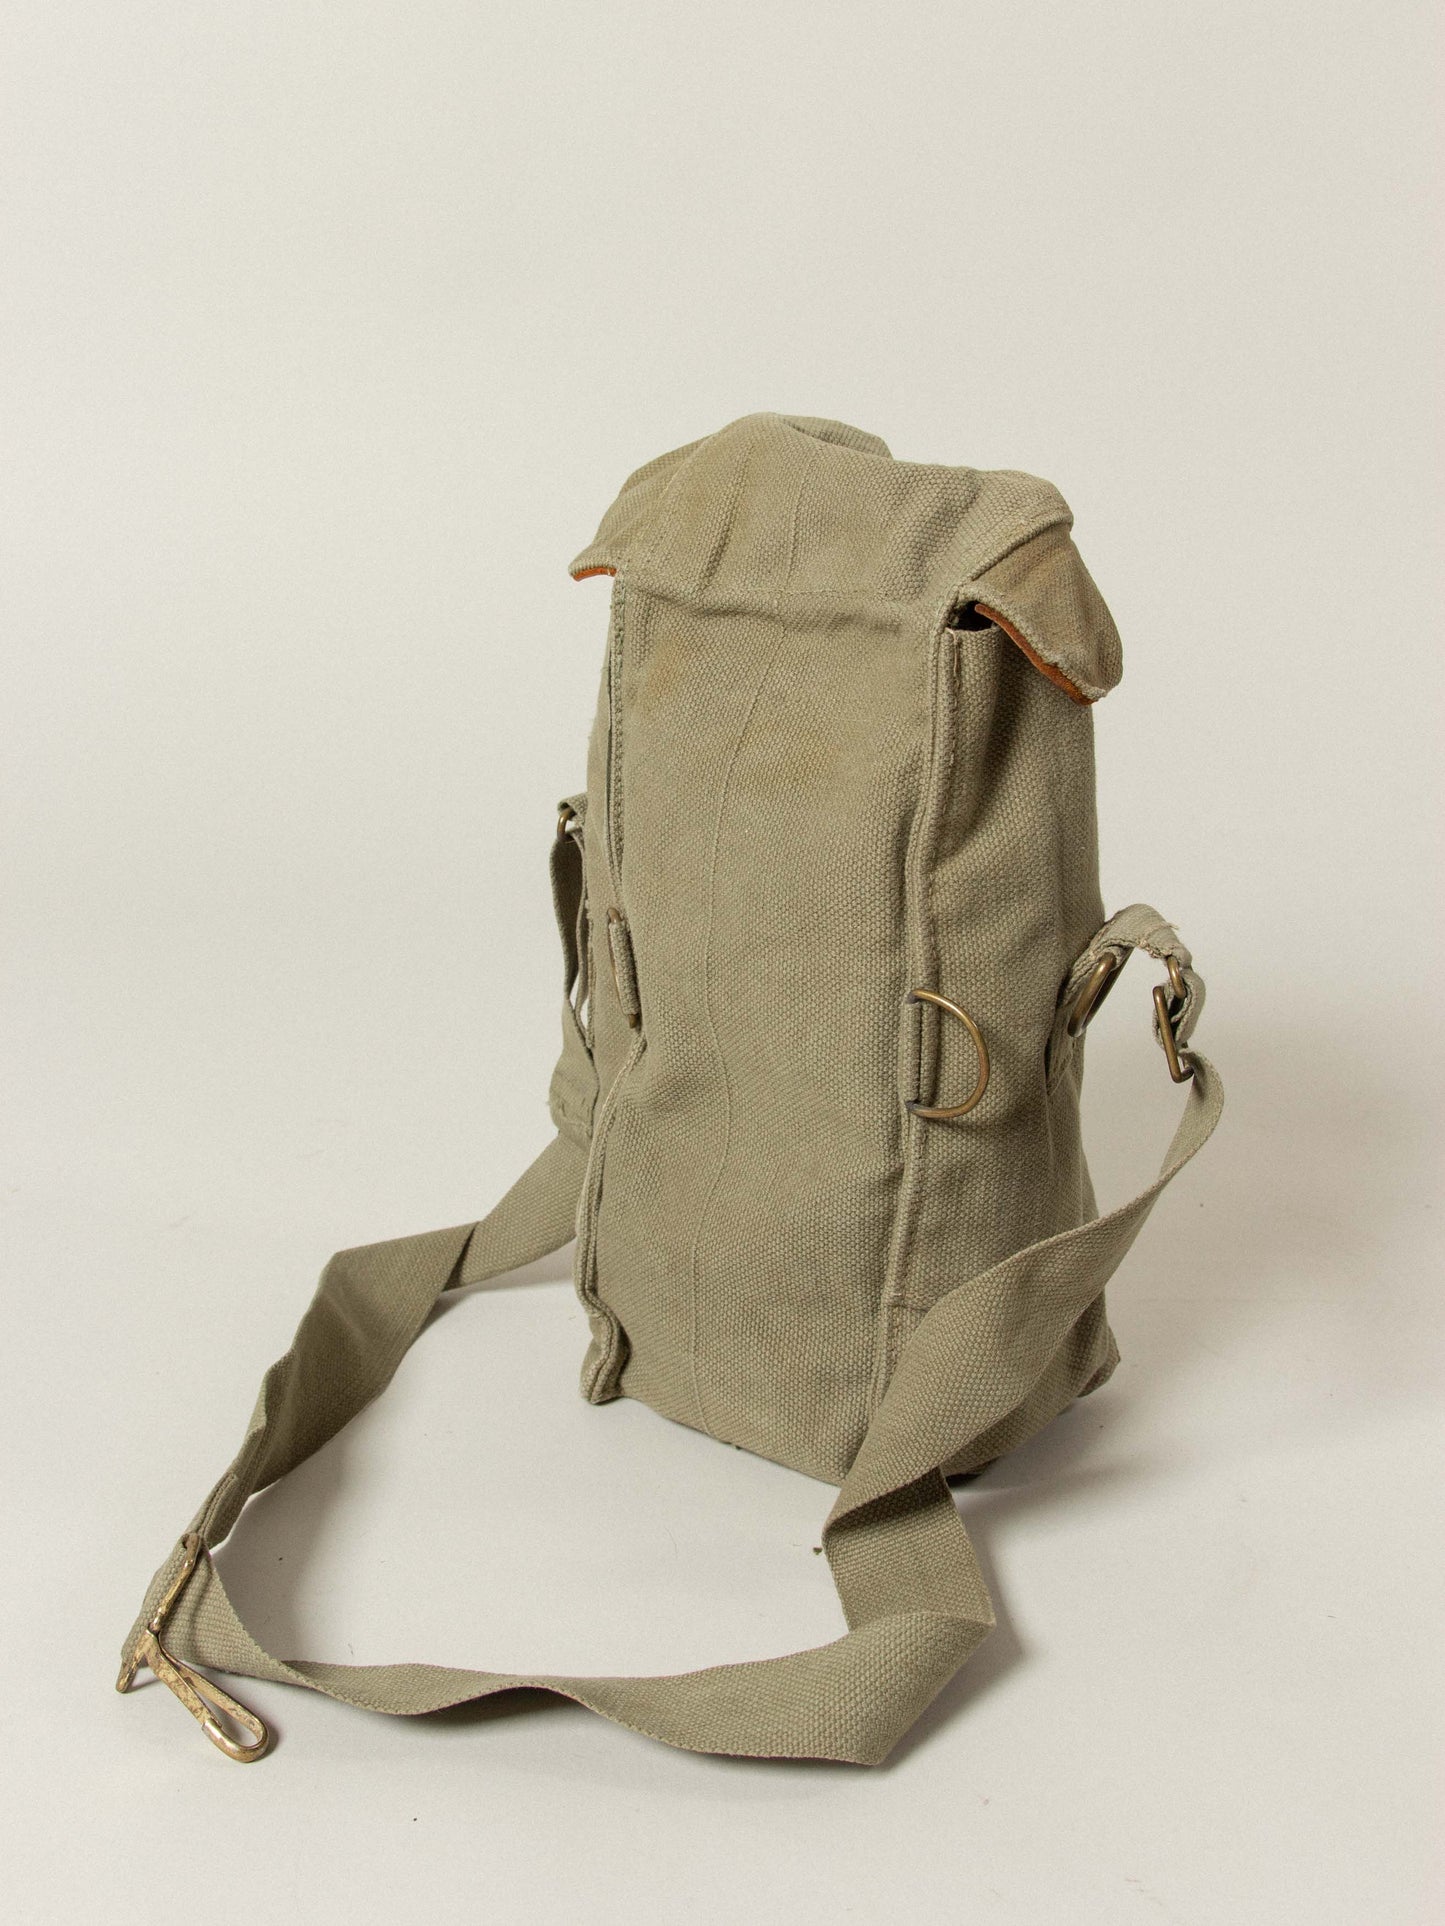 Vtg 1940s British Army Gas Mask Bag